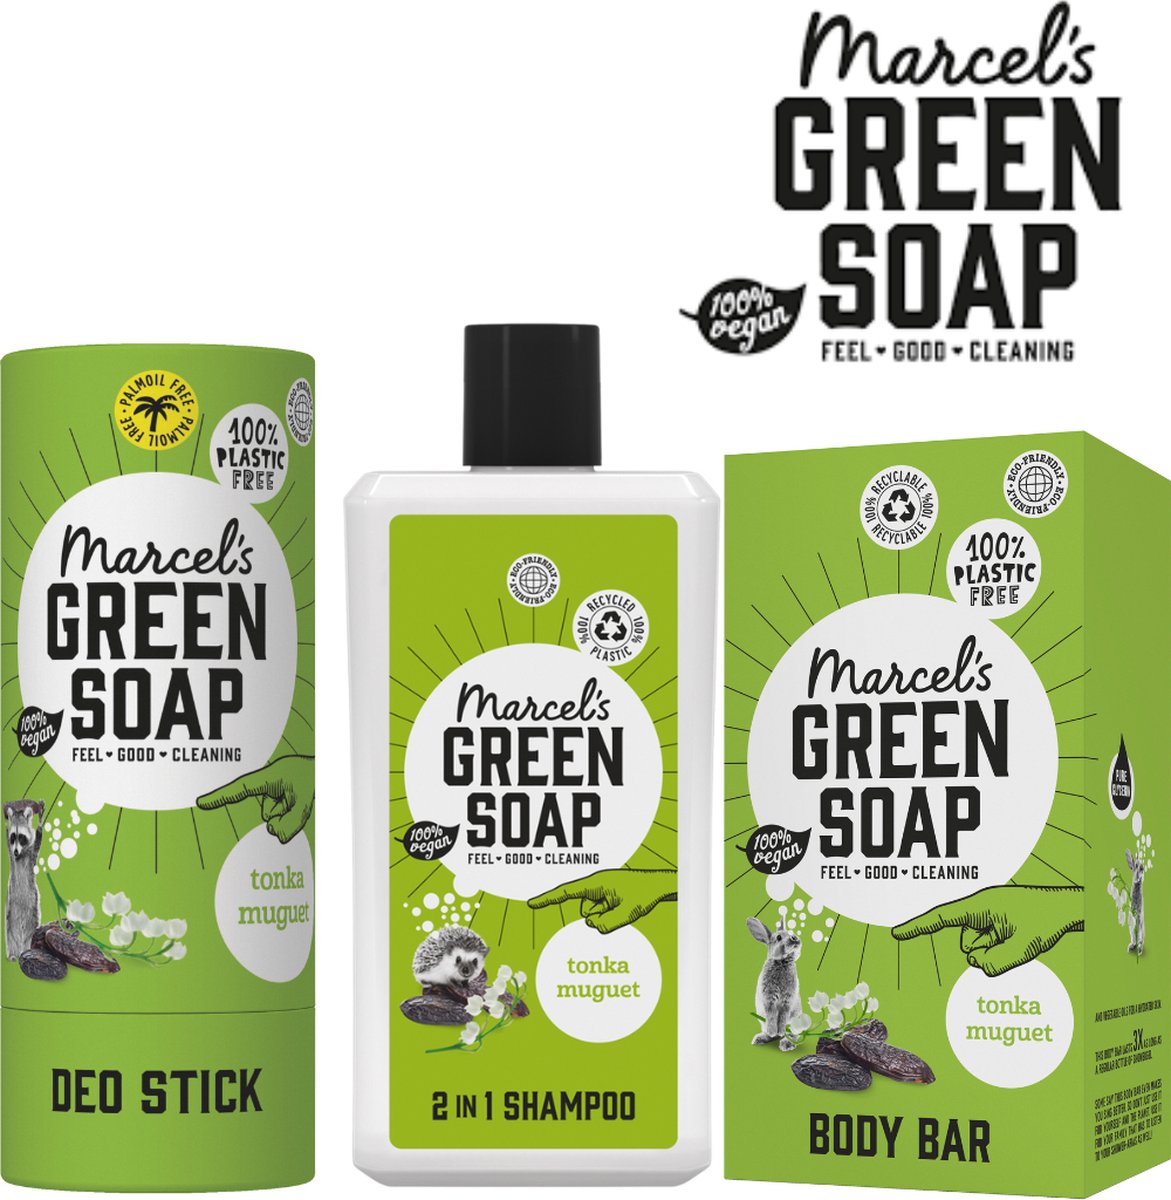 Marcel's Green Soap - Fris & Fruitig Pakket (Tonka & Muguet) / Geschenkset / Cadeau / Shampoo / Douchegel / Deodorant / Badkamer / Douche / Hygiene / Uiterlijk / Verzorging / Ecologisch / Vegan